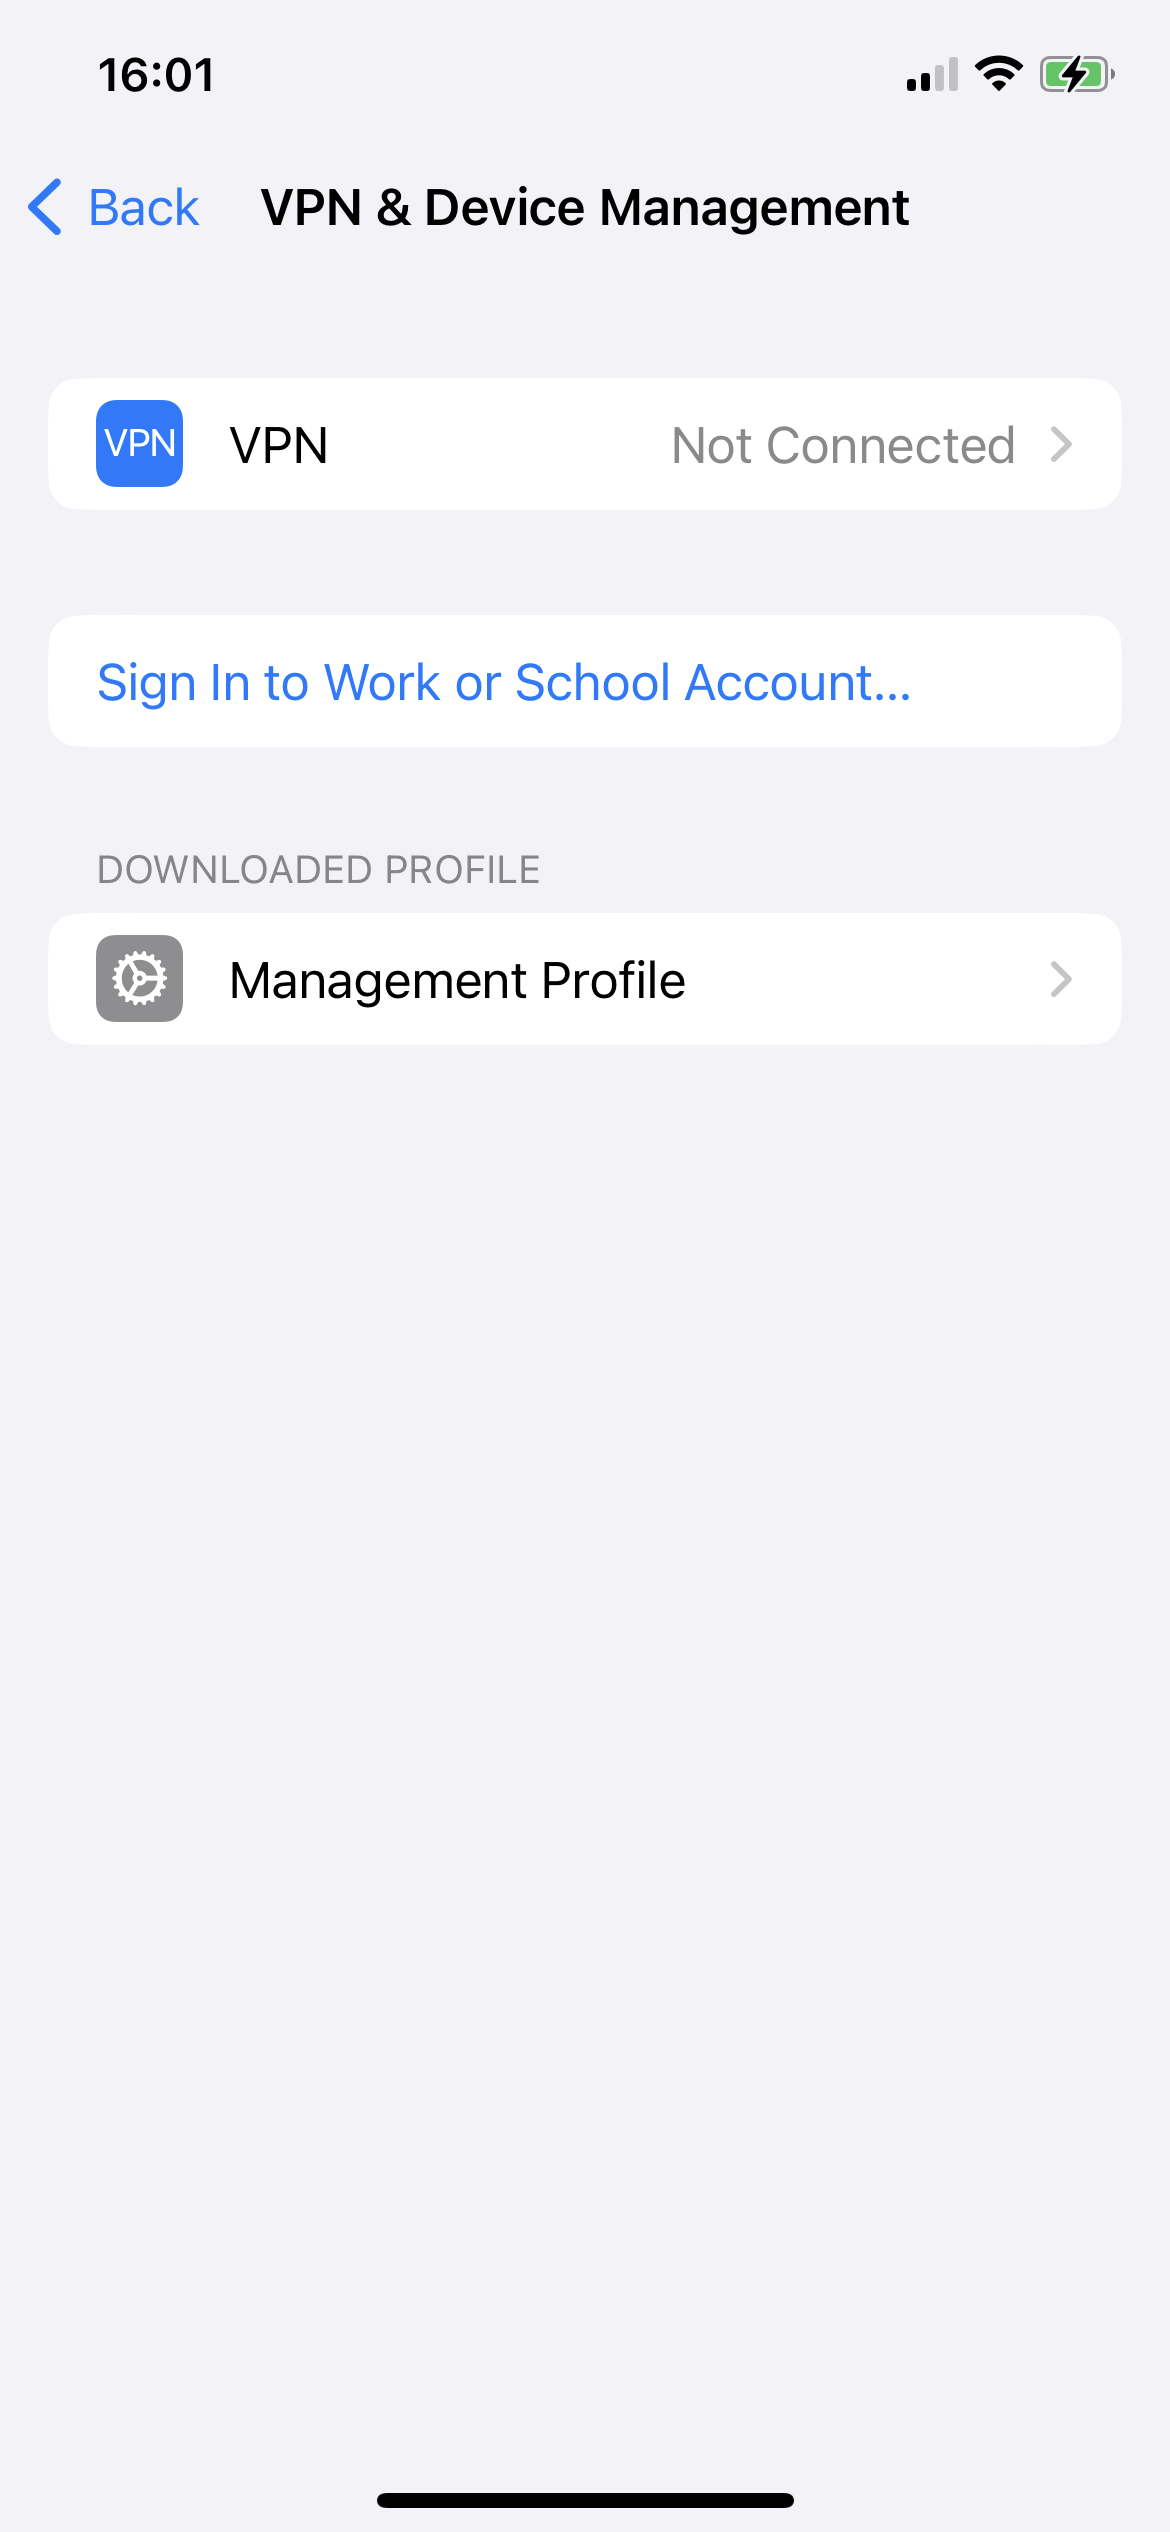 BYOD Reimagined: A Web-Based Enrollment Journey for iOS